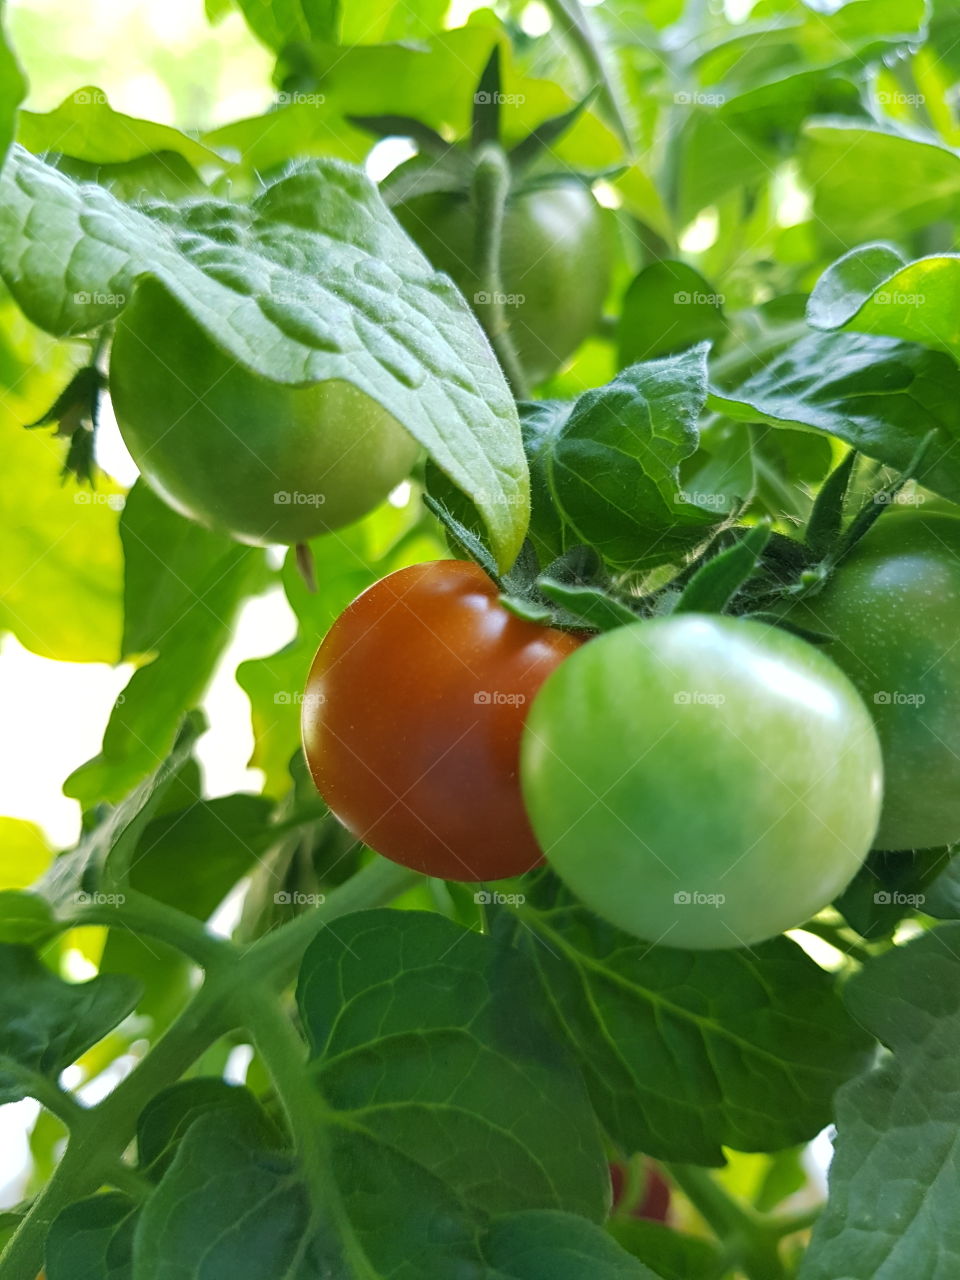 tomato 
tomat
hemmaodlad
ekologisk
busktomat
skörda